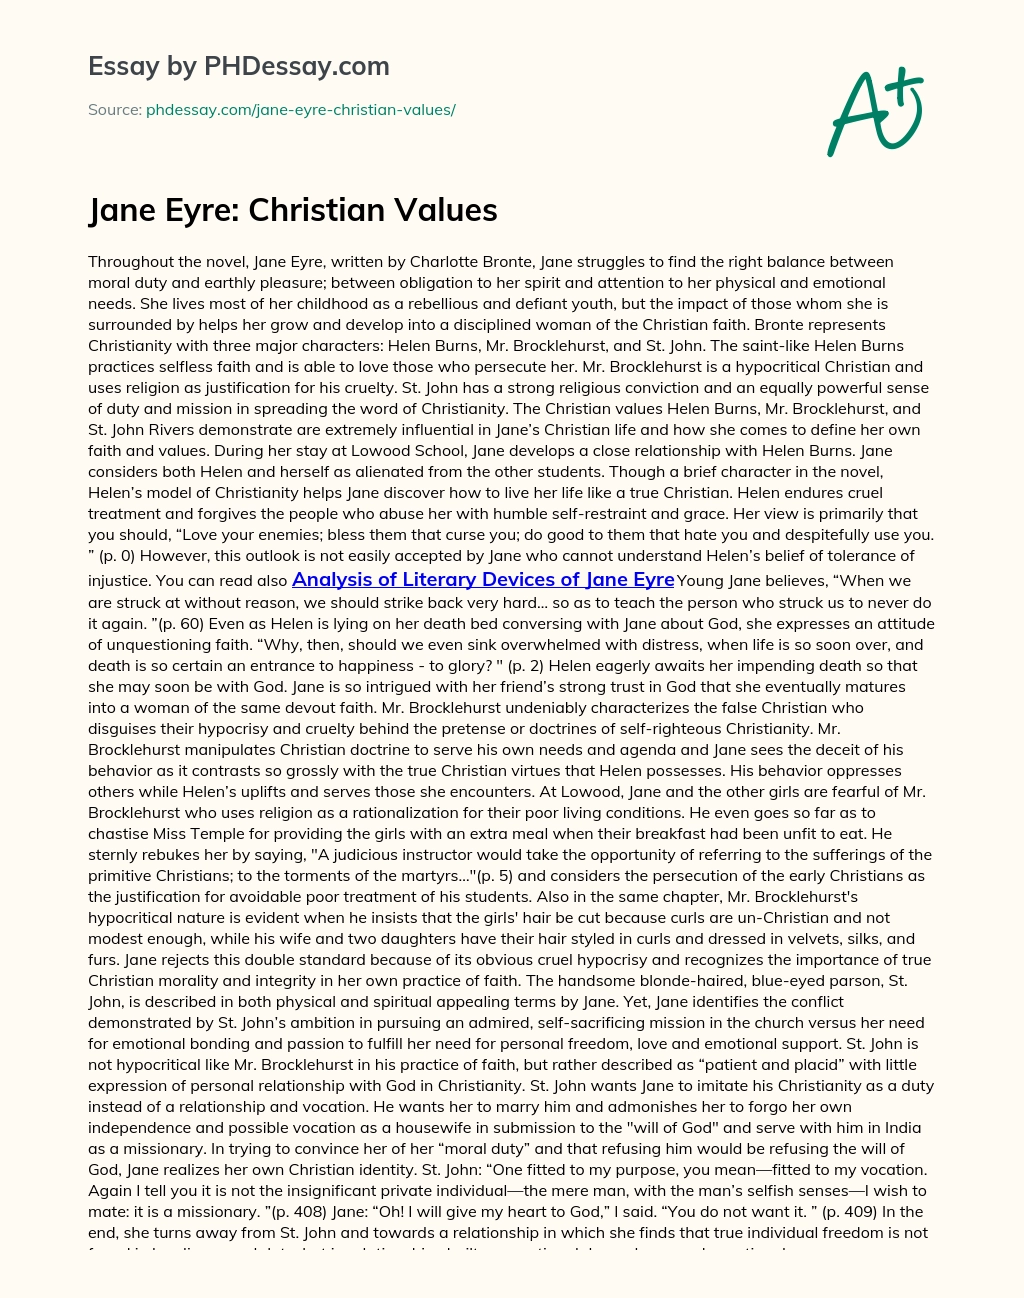 Jane Eyre: Christian Values essay